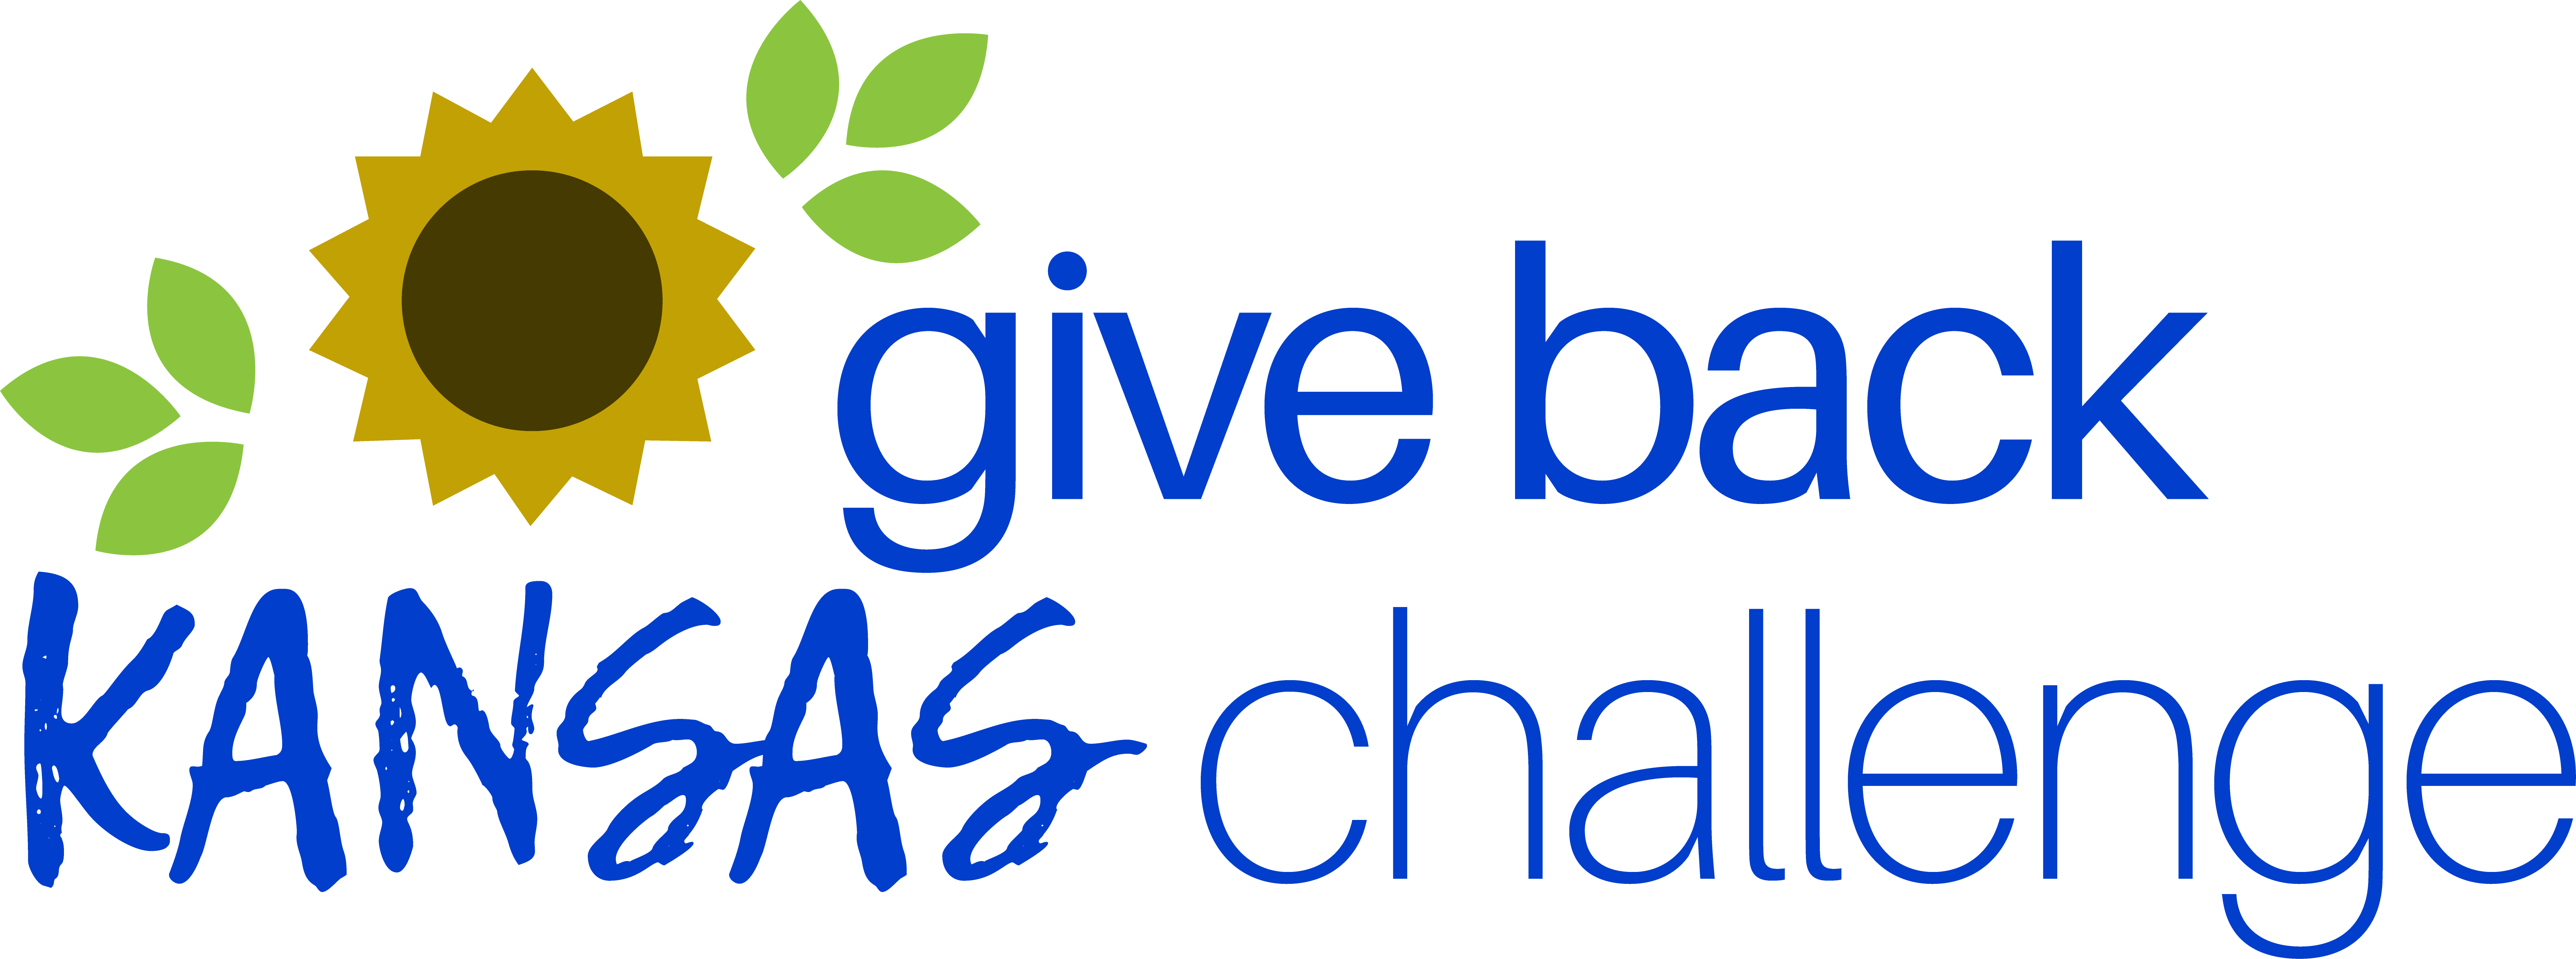 Give Back Kansas Challenge Logo with Sunflower